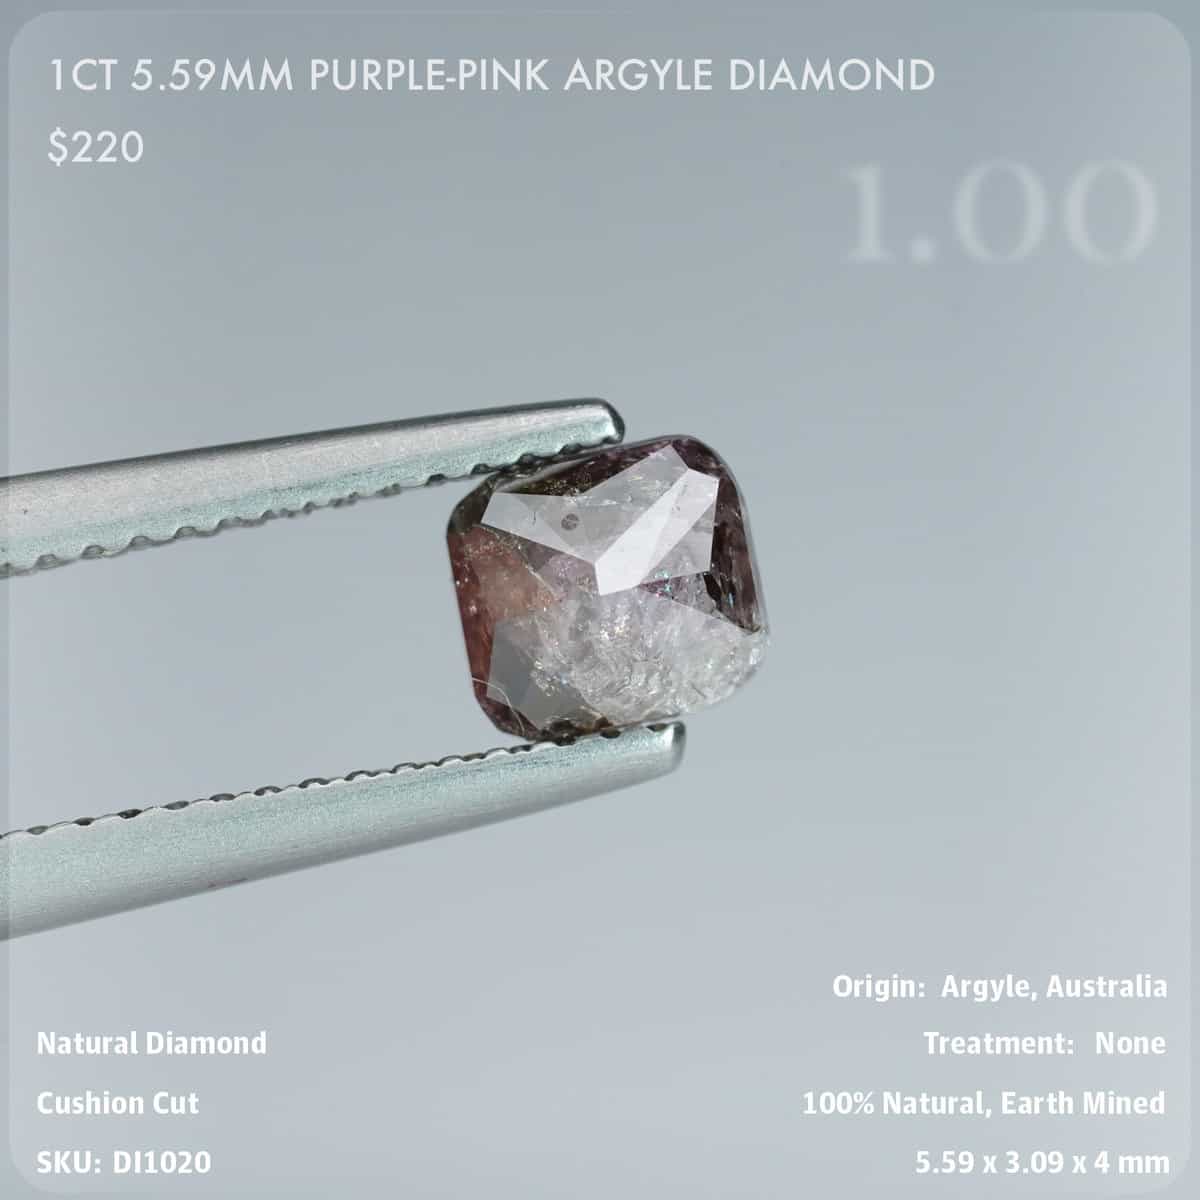 1CT 5.59mm Purple-Pink Argyle Diamond